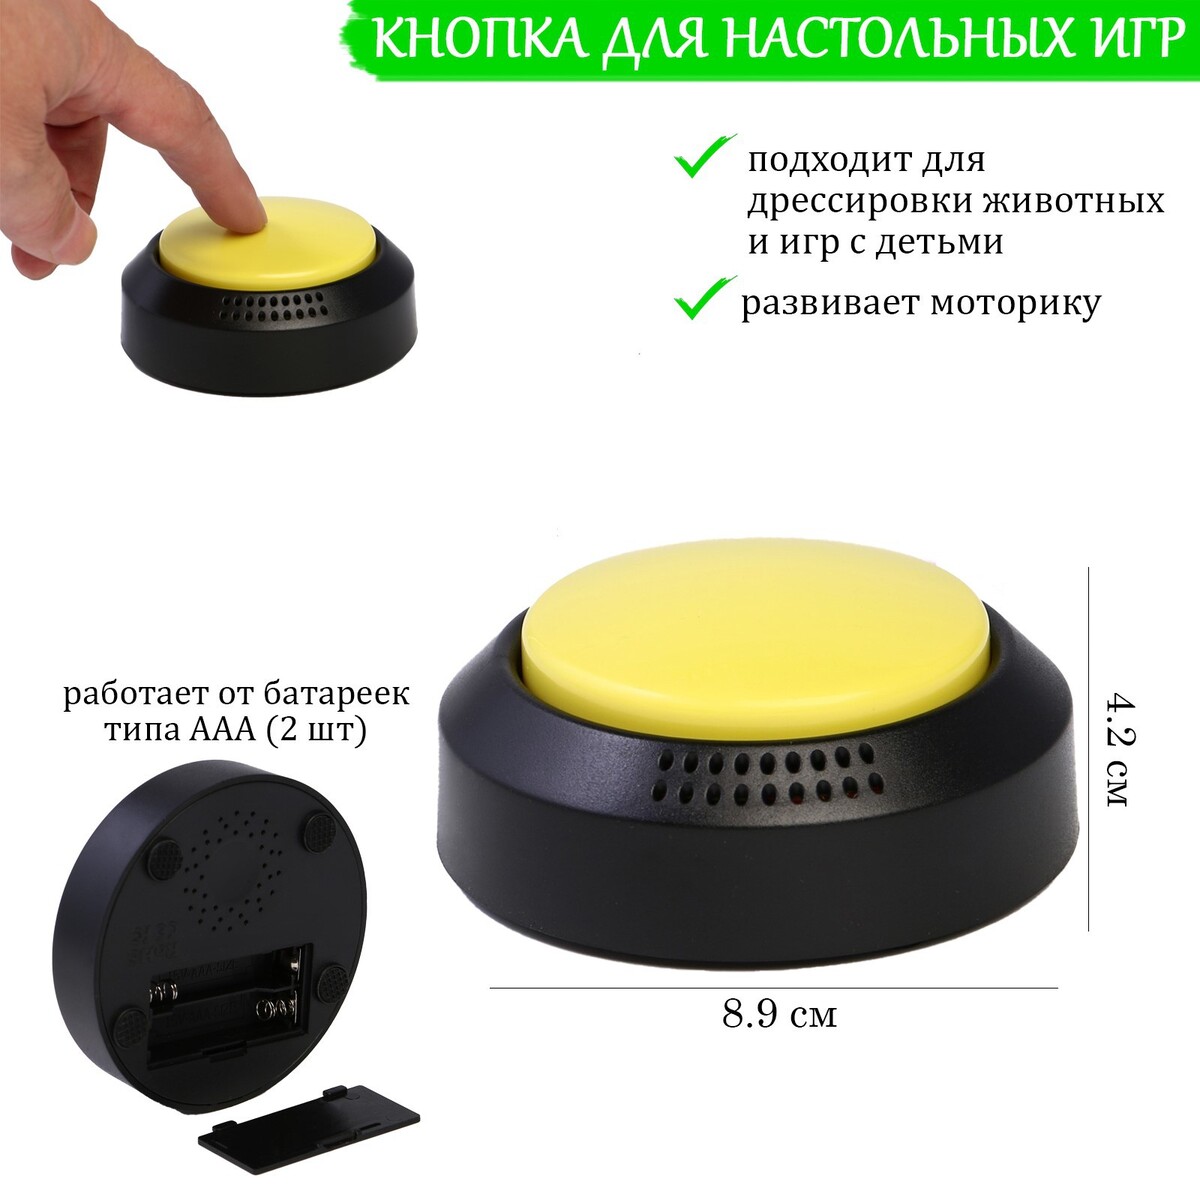 Желтая кнопка для игр, 2 аа, 8.9 х 4.2 см No brand 06020814 - фото 1